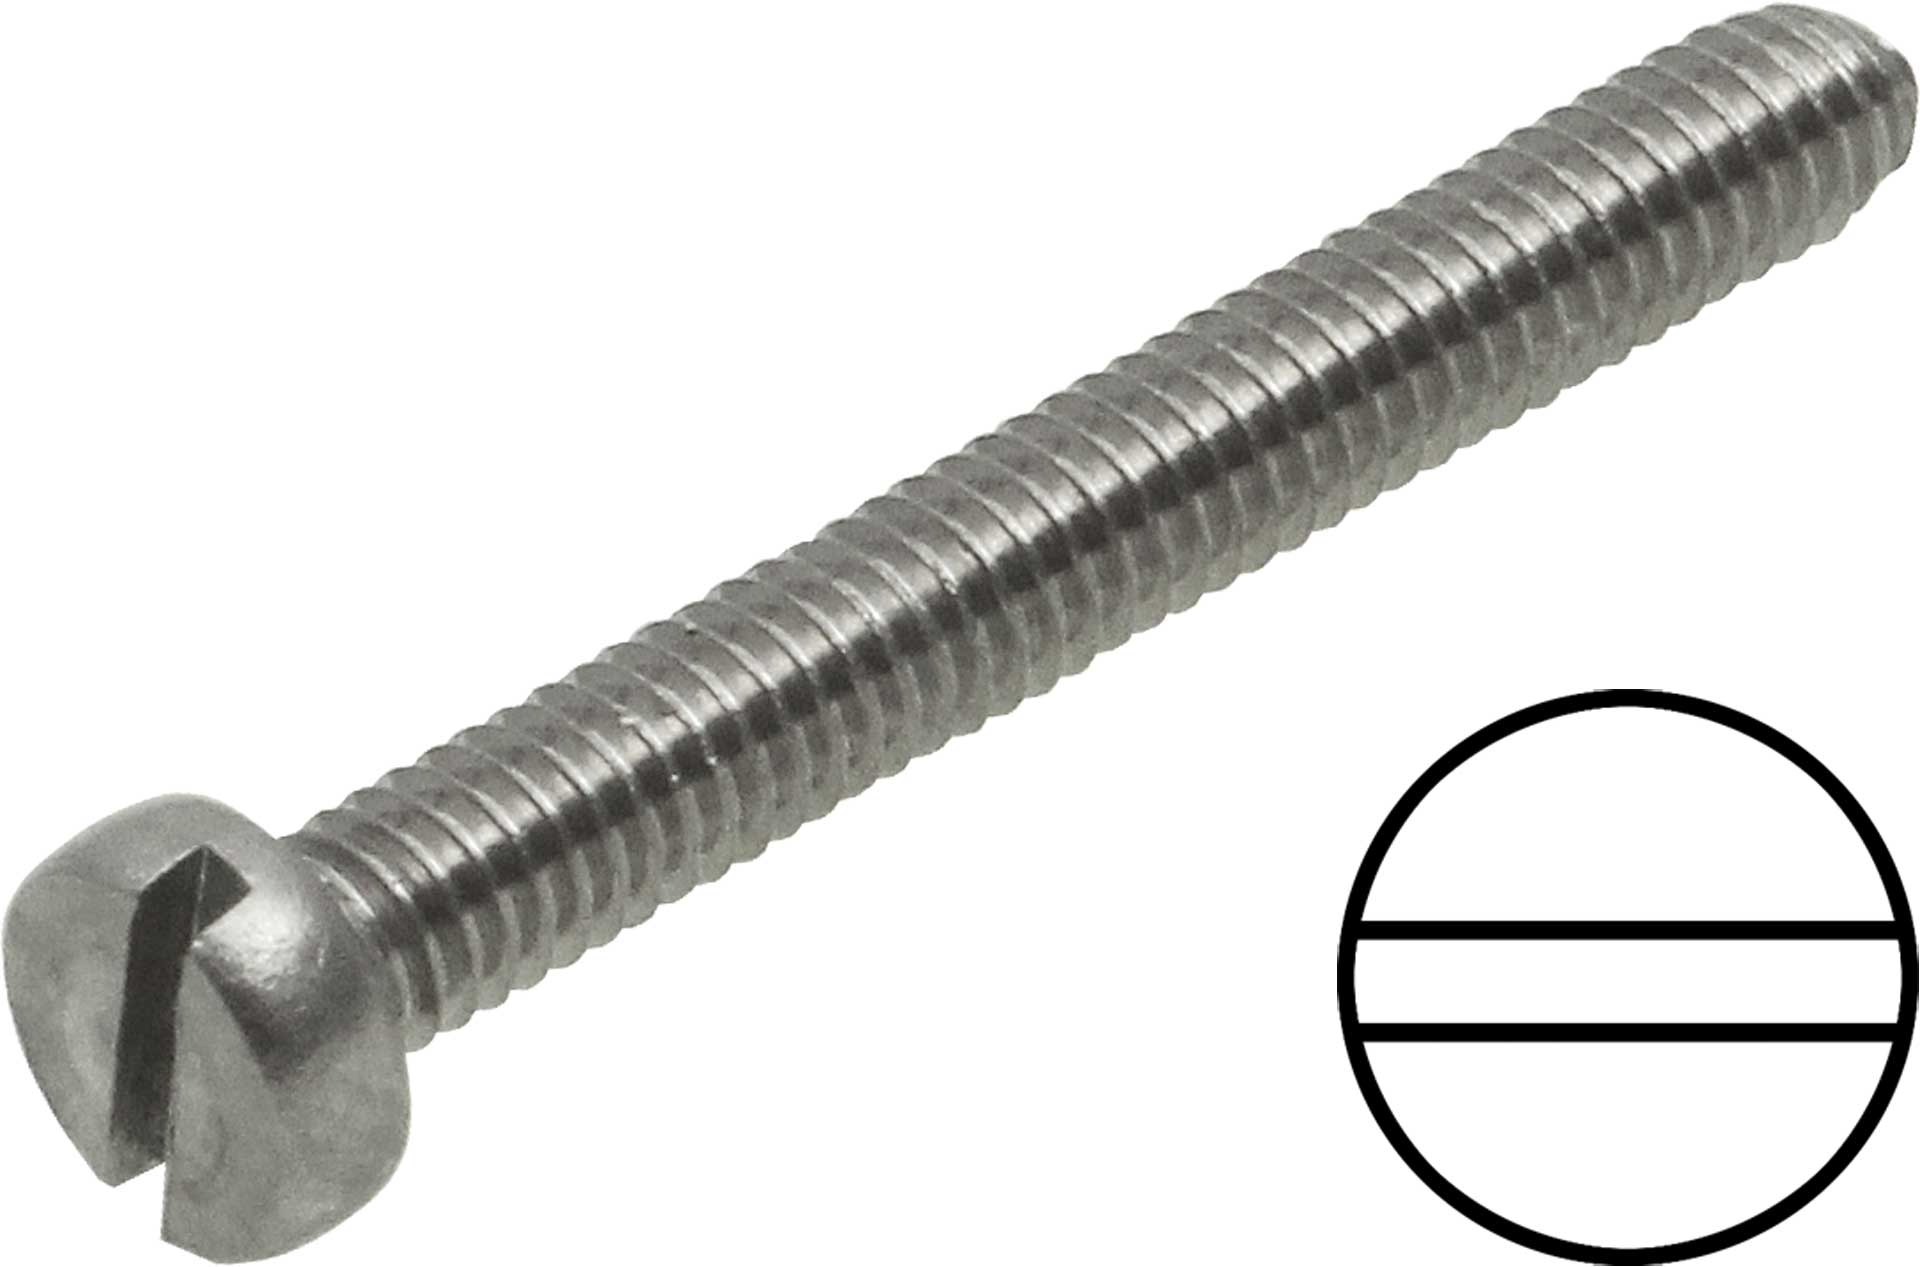 Modellbau Lindinger Cylinder head screws M2.5/8mm slotted Stainless steel, rustproof 25pcs.